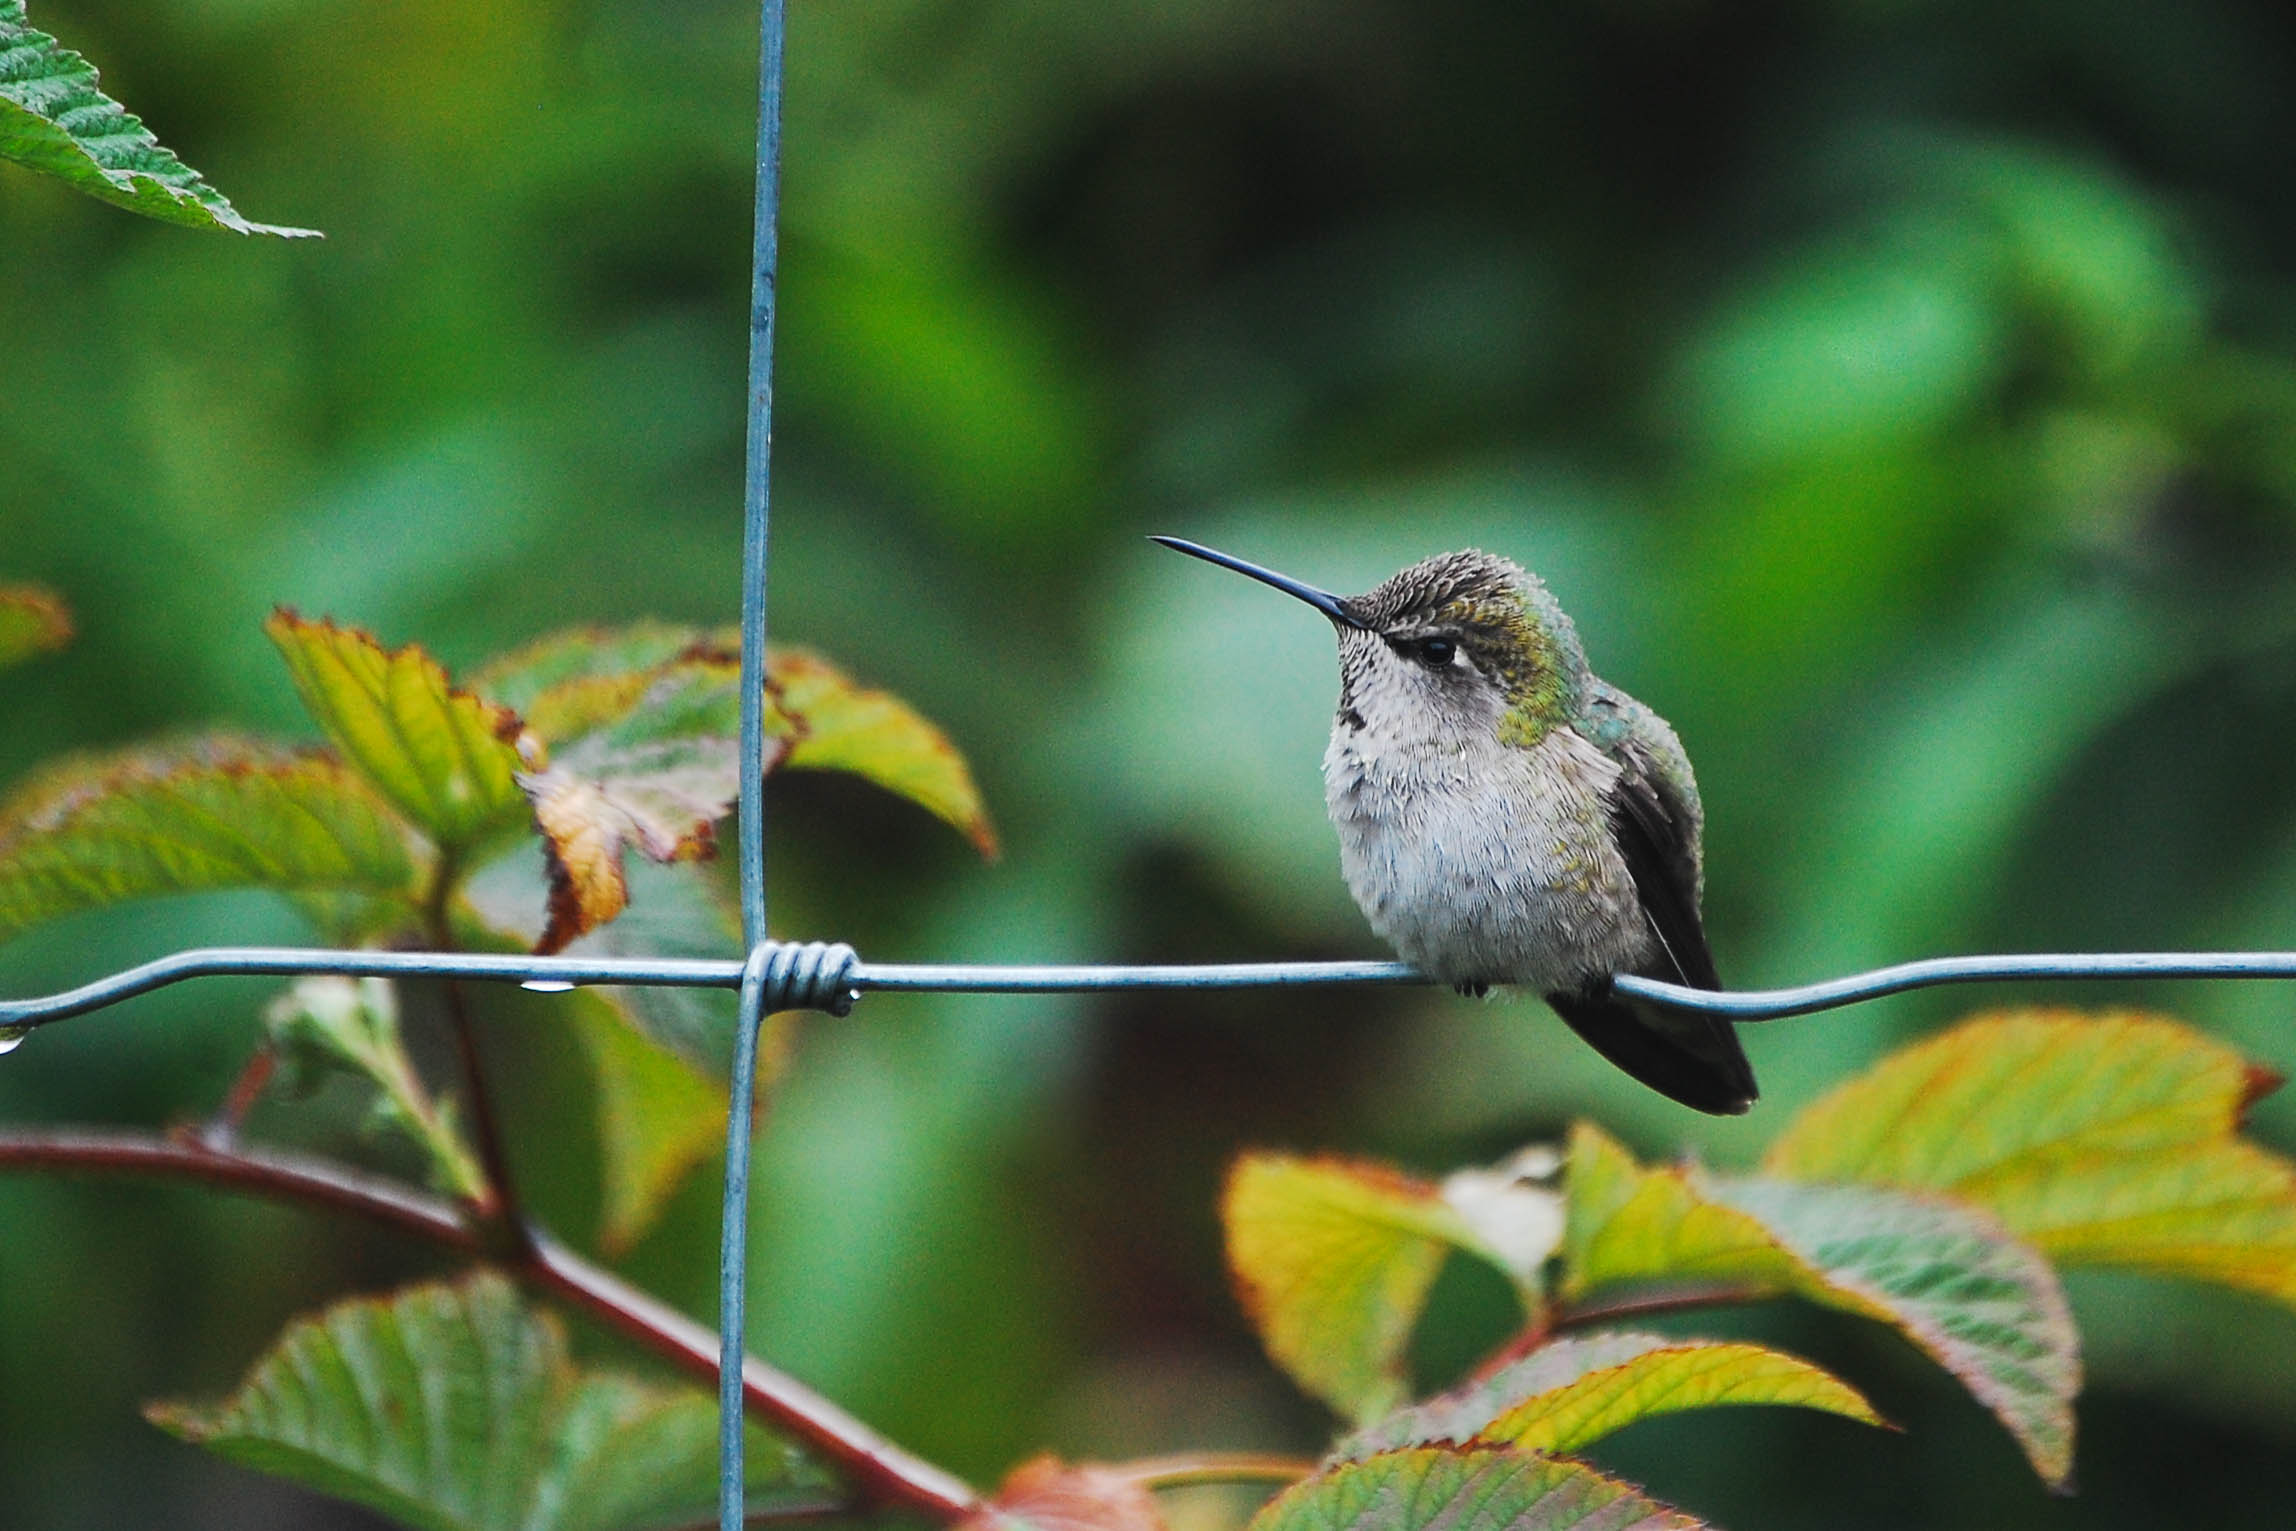  A hummingbird fluffs itself up in the chill following an October rainstorm in Oregon 